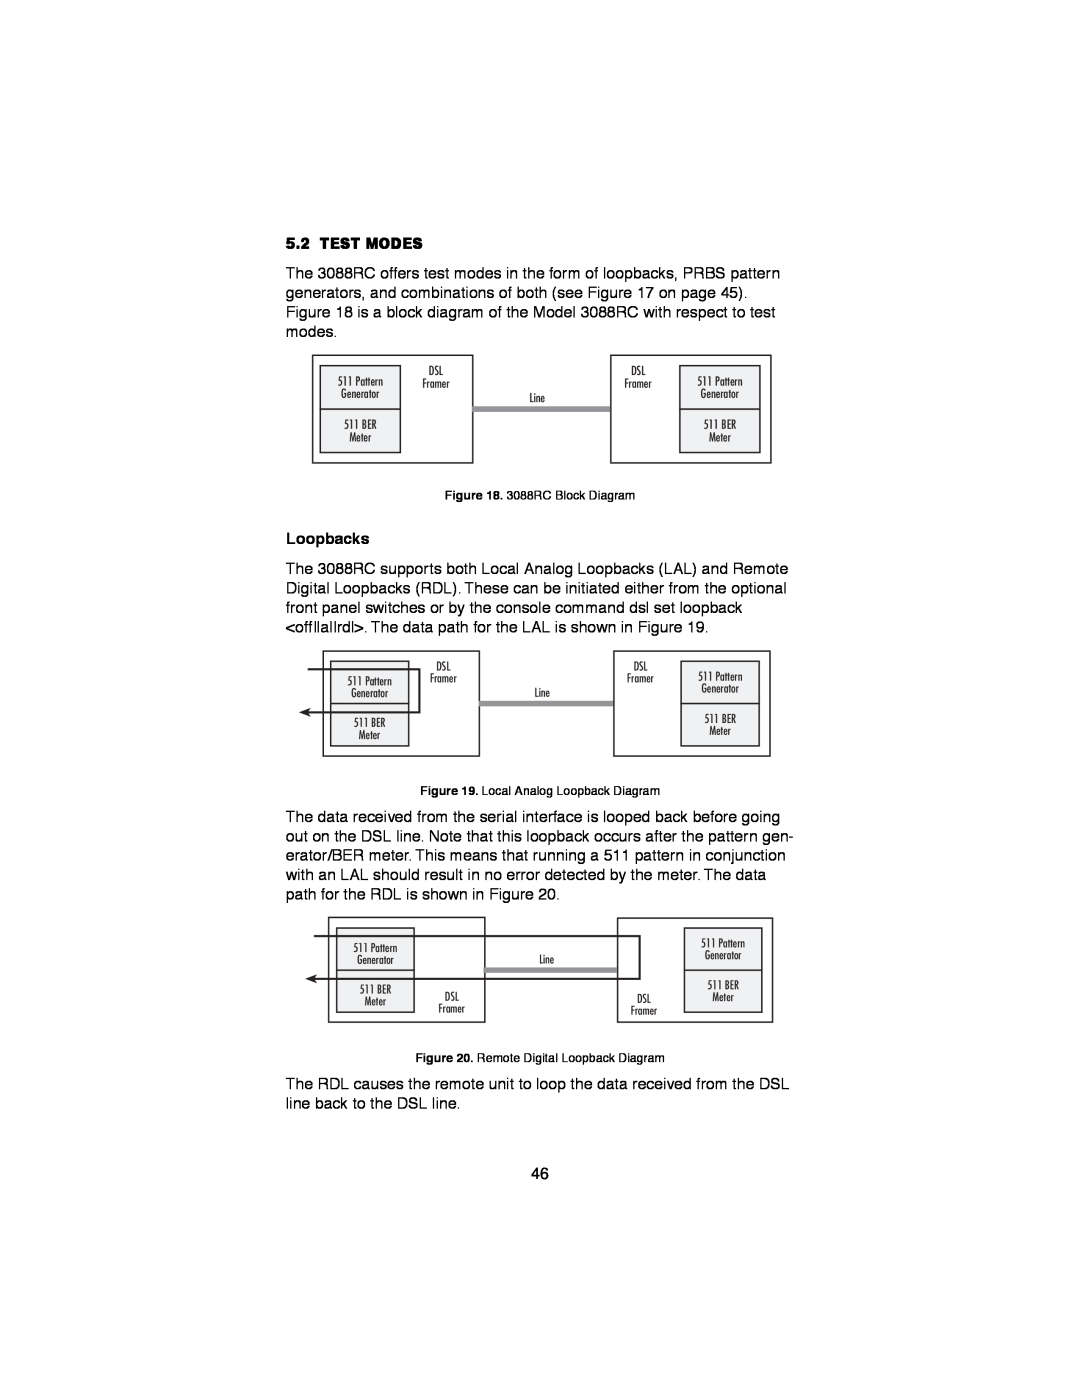 Patton electronic user manual Test Modes, Loopbacks, 3088RC Block Diagram, Local Analog Loopback Diagram 